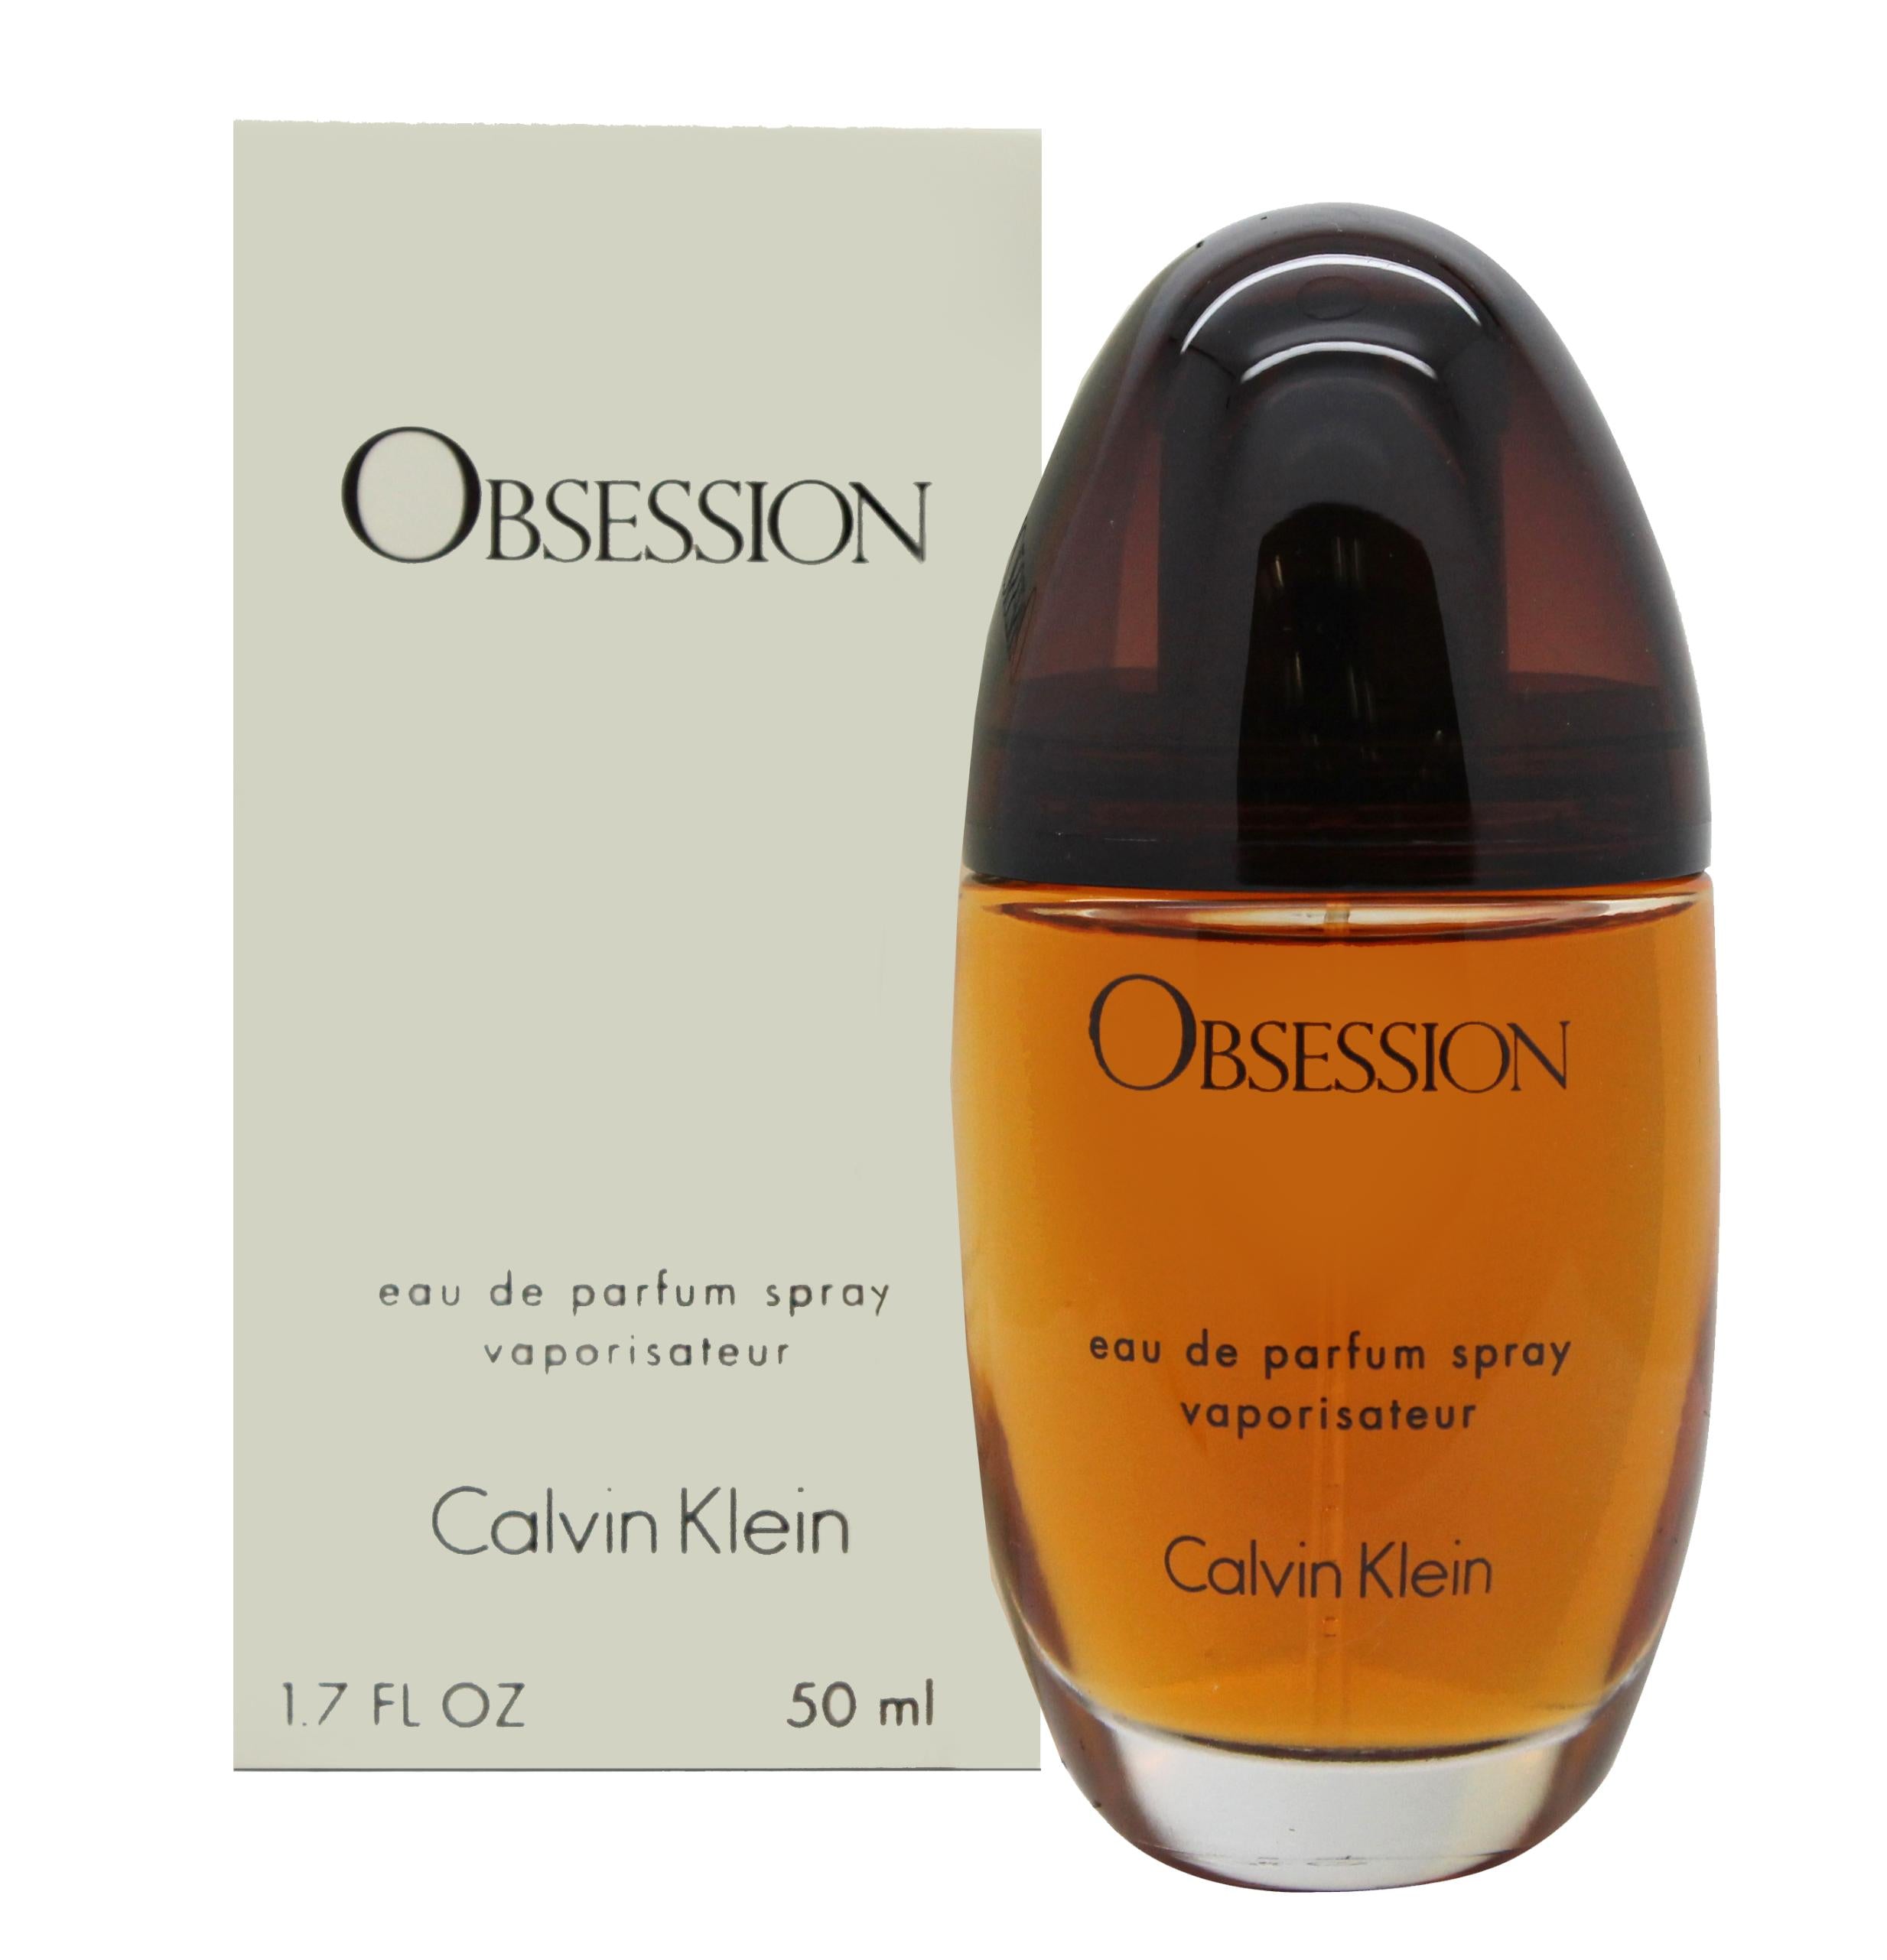 View Calvin Klein Obsession Eau de Parfum 50ml Spray information